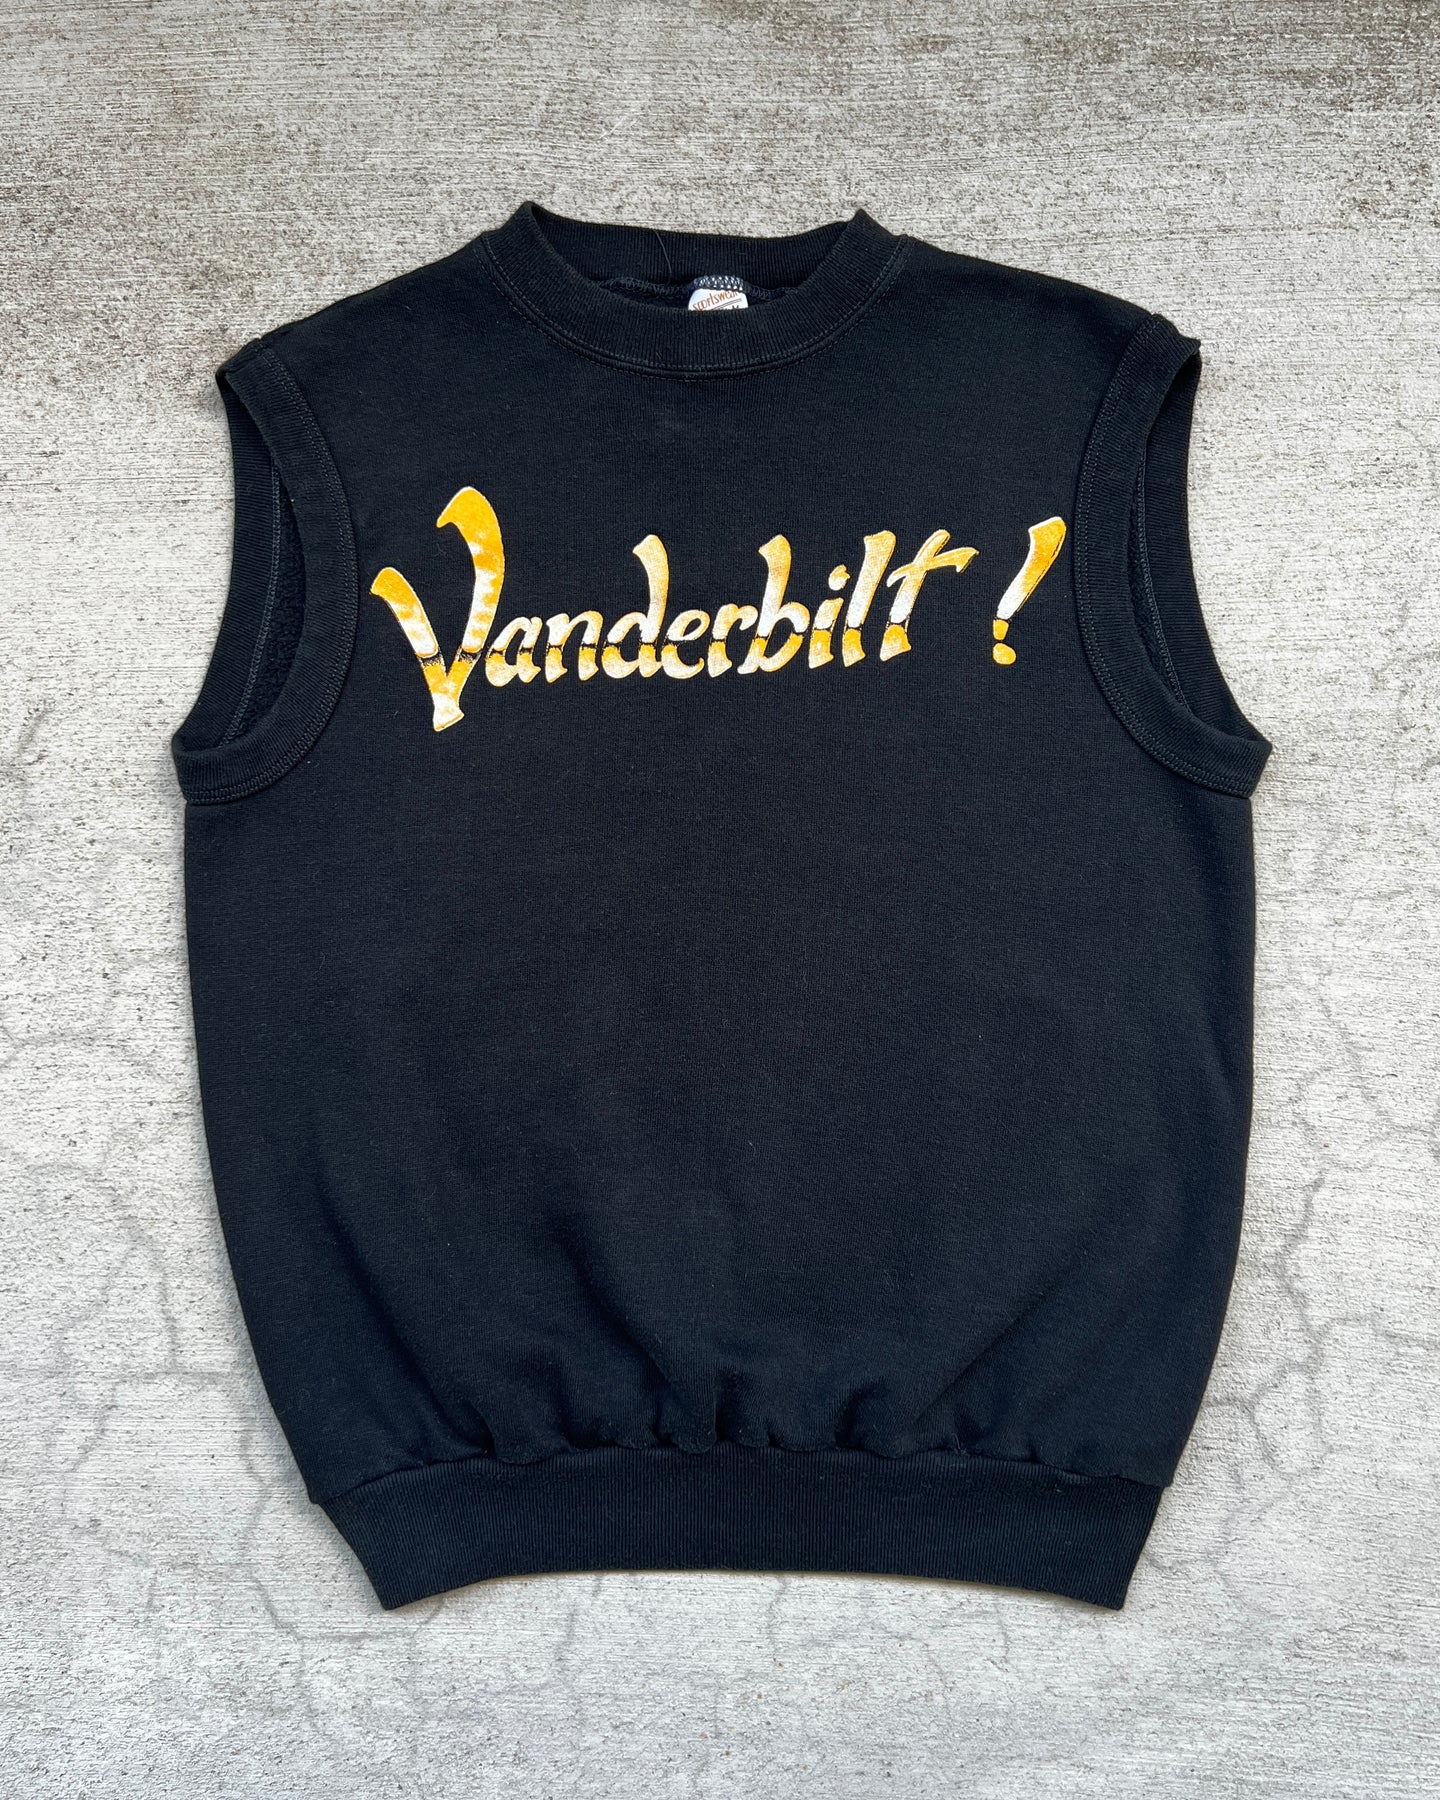 1980s Vanderbilt Sleeveless Crewneck - Size Medium